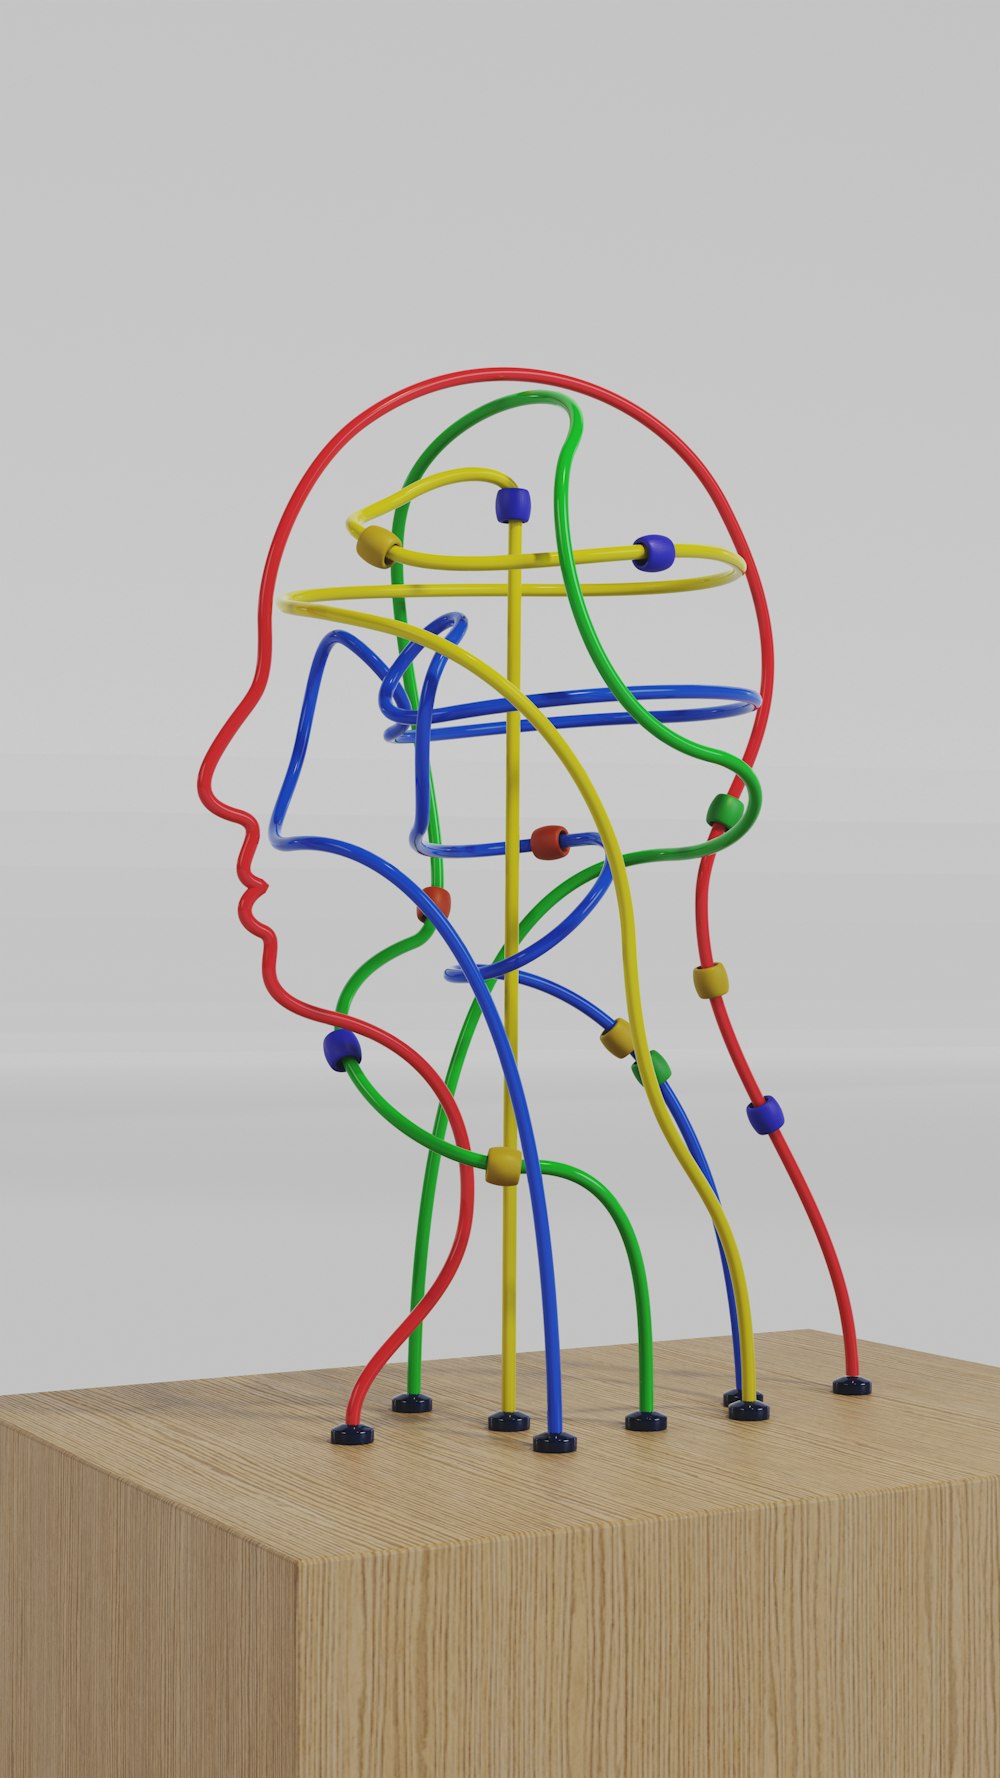 Una escultura de la cabeza de un hombre hecha de alambres de colores